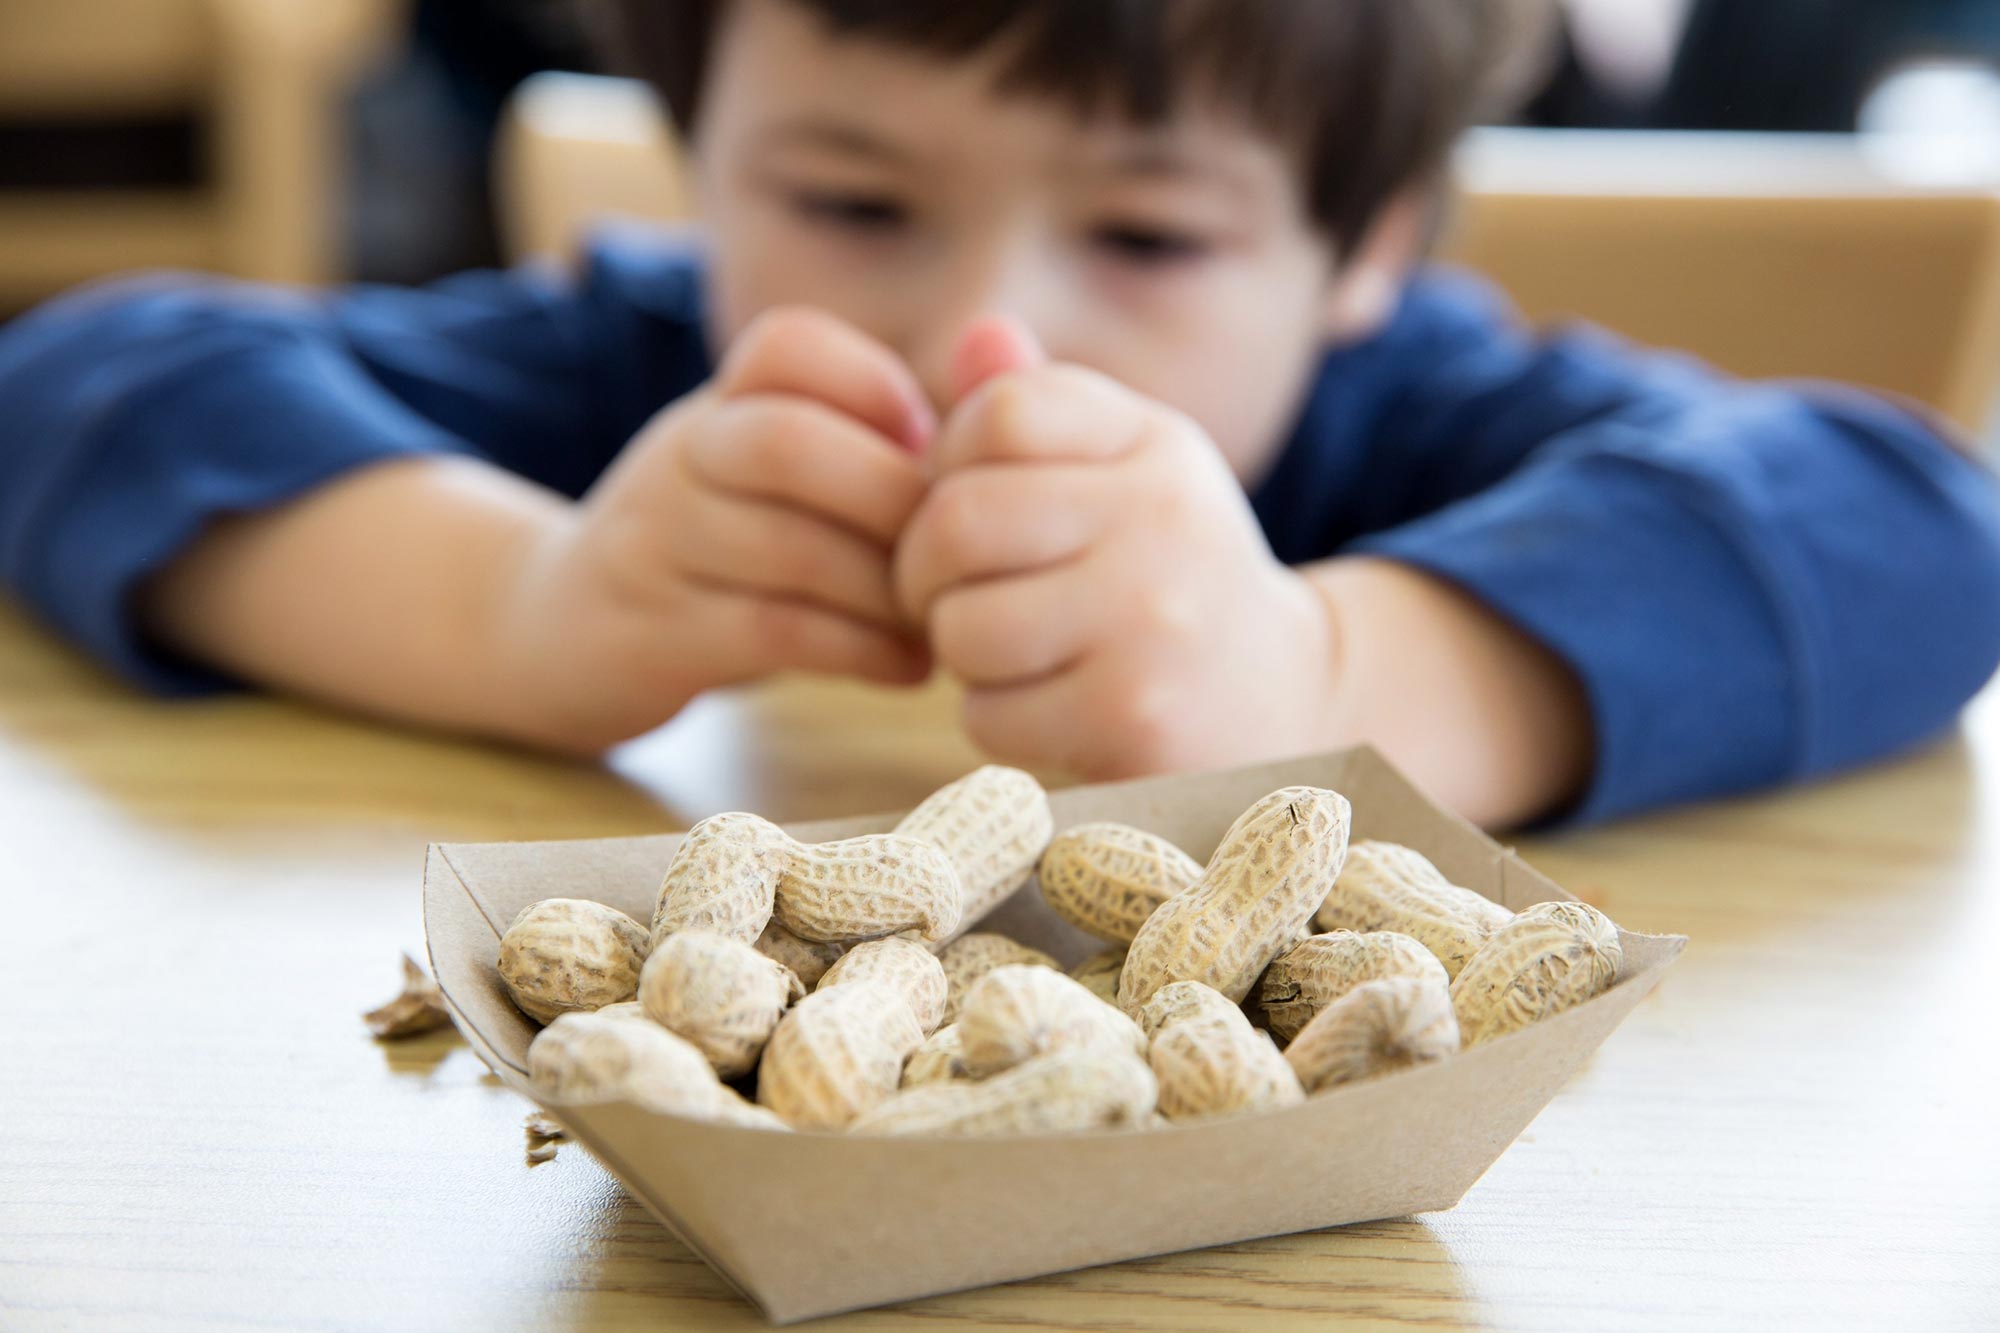 Child Eating Peanuts